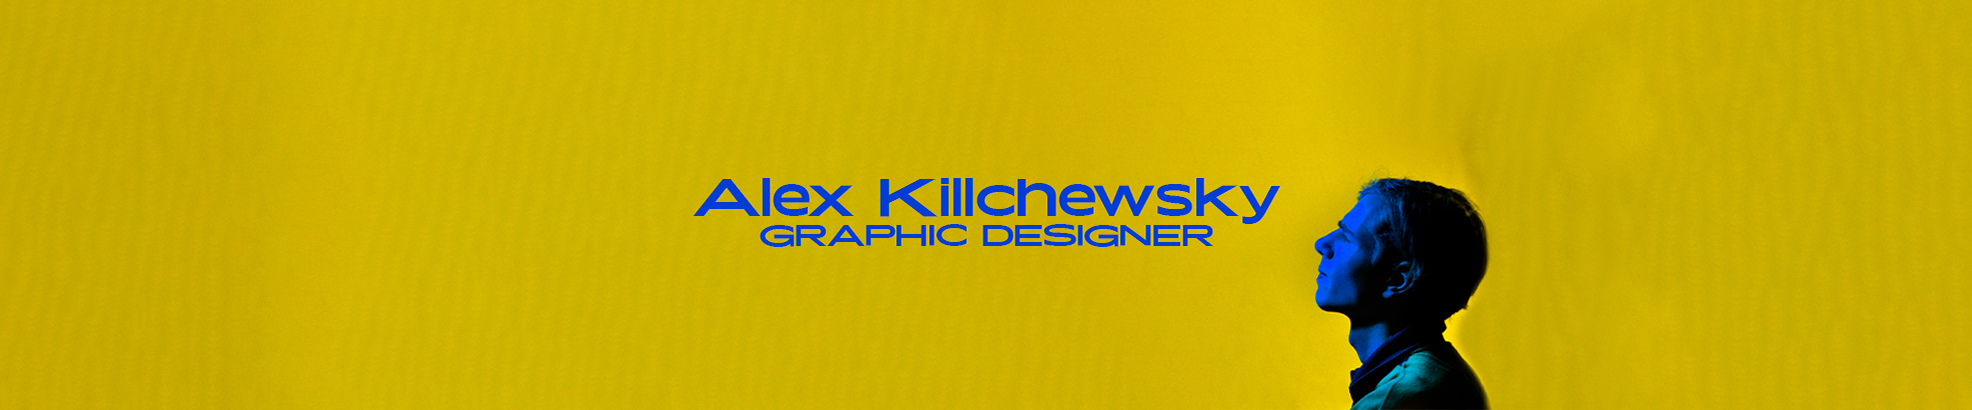 Alex Killchewskys profilbanner